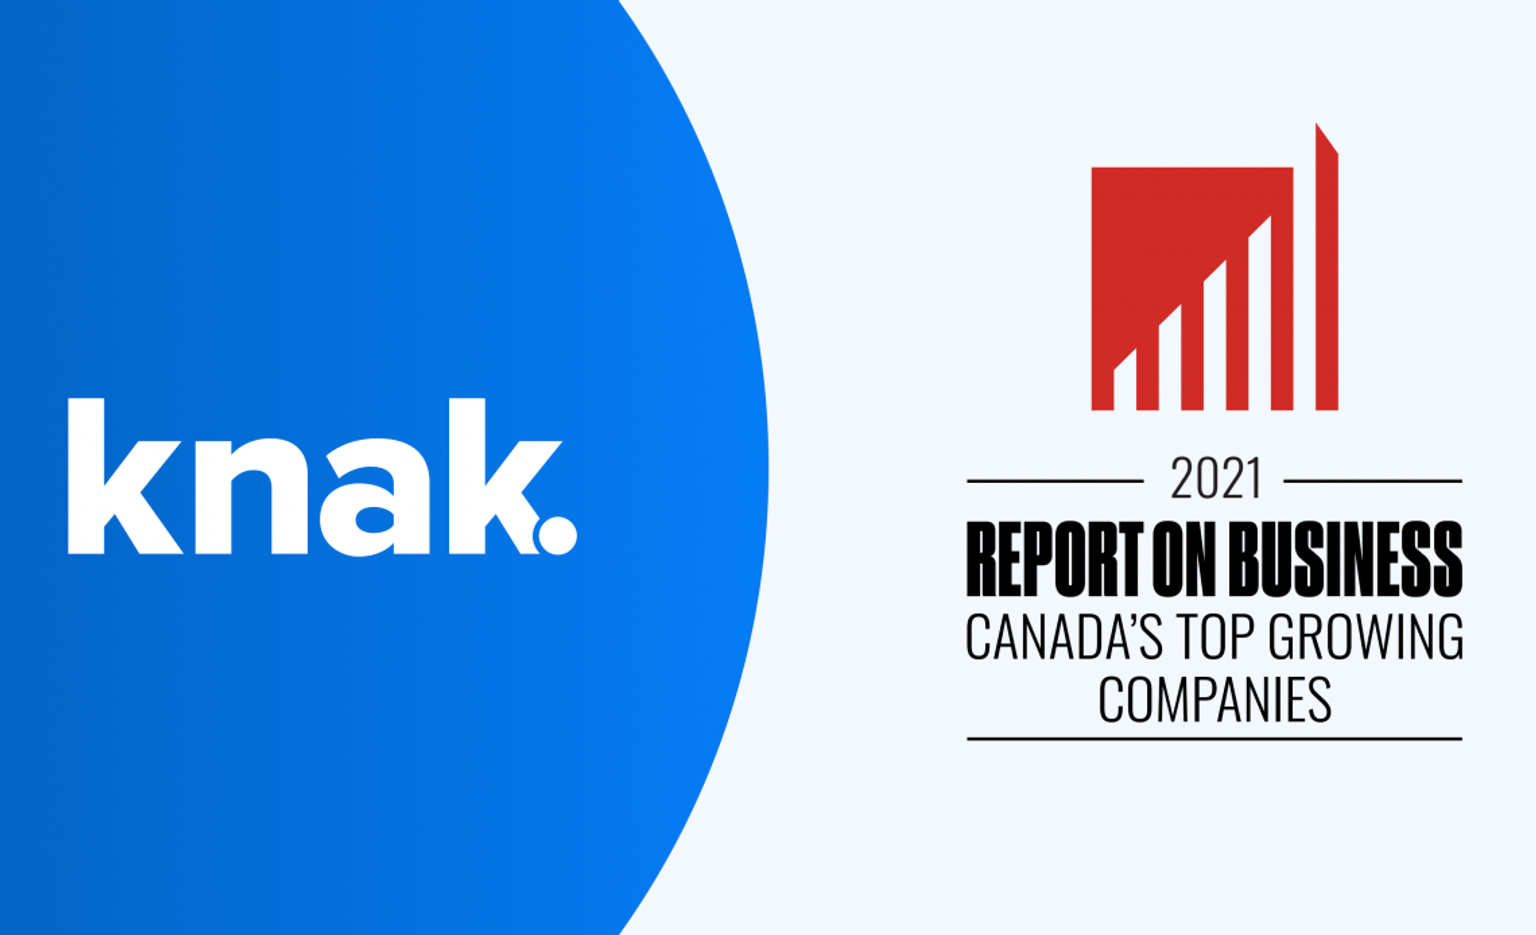 Knak ranks 107th among Canada’s Top Growing Companies